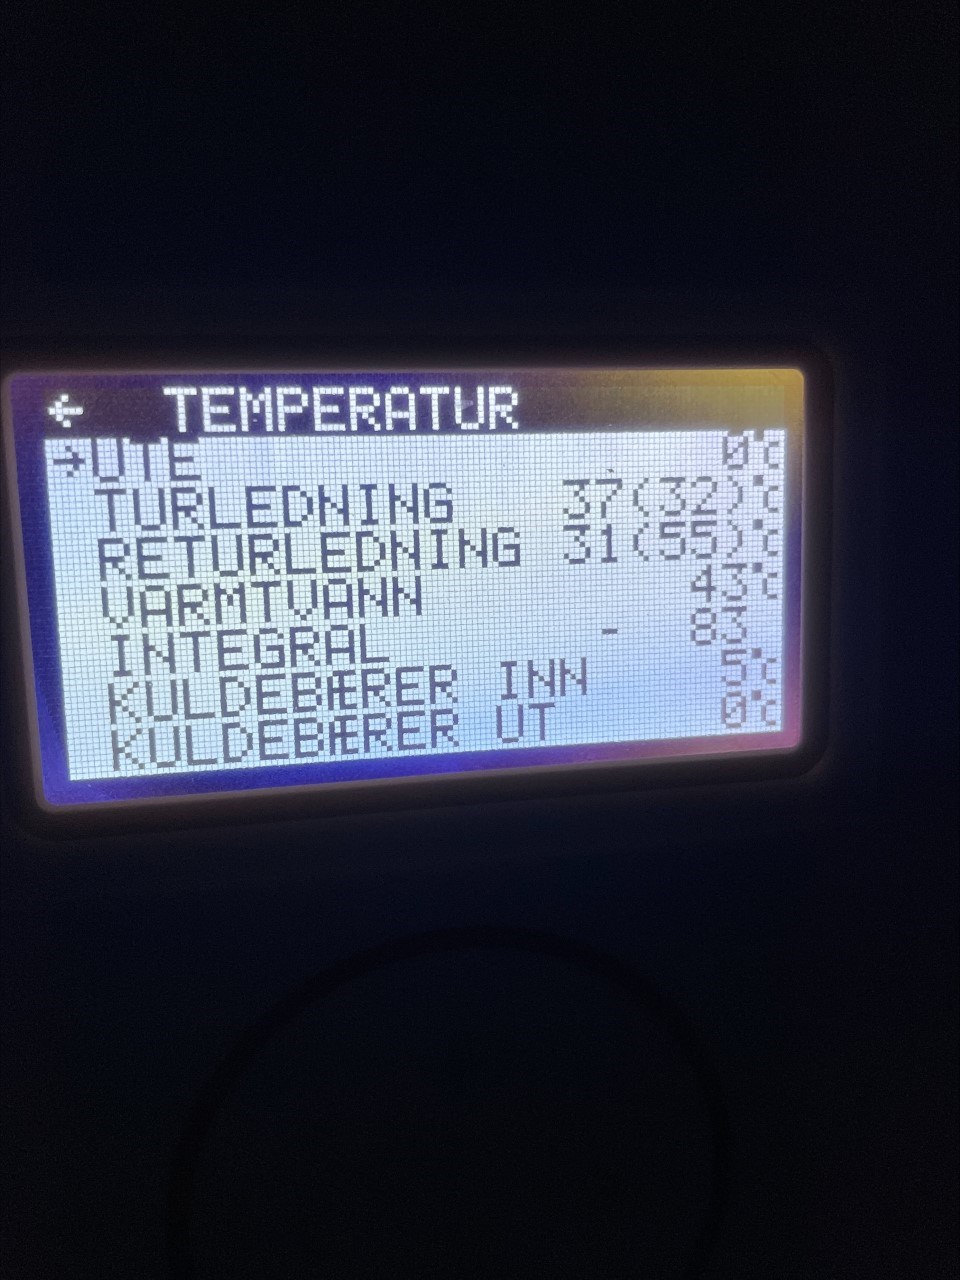 Høy turtemperatur | Thermia Diplomat - Temperatur.jpeg - Loen